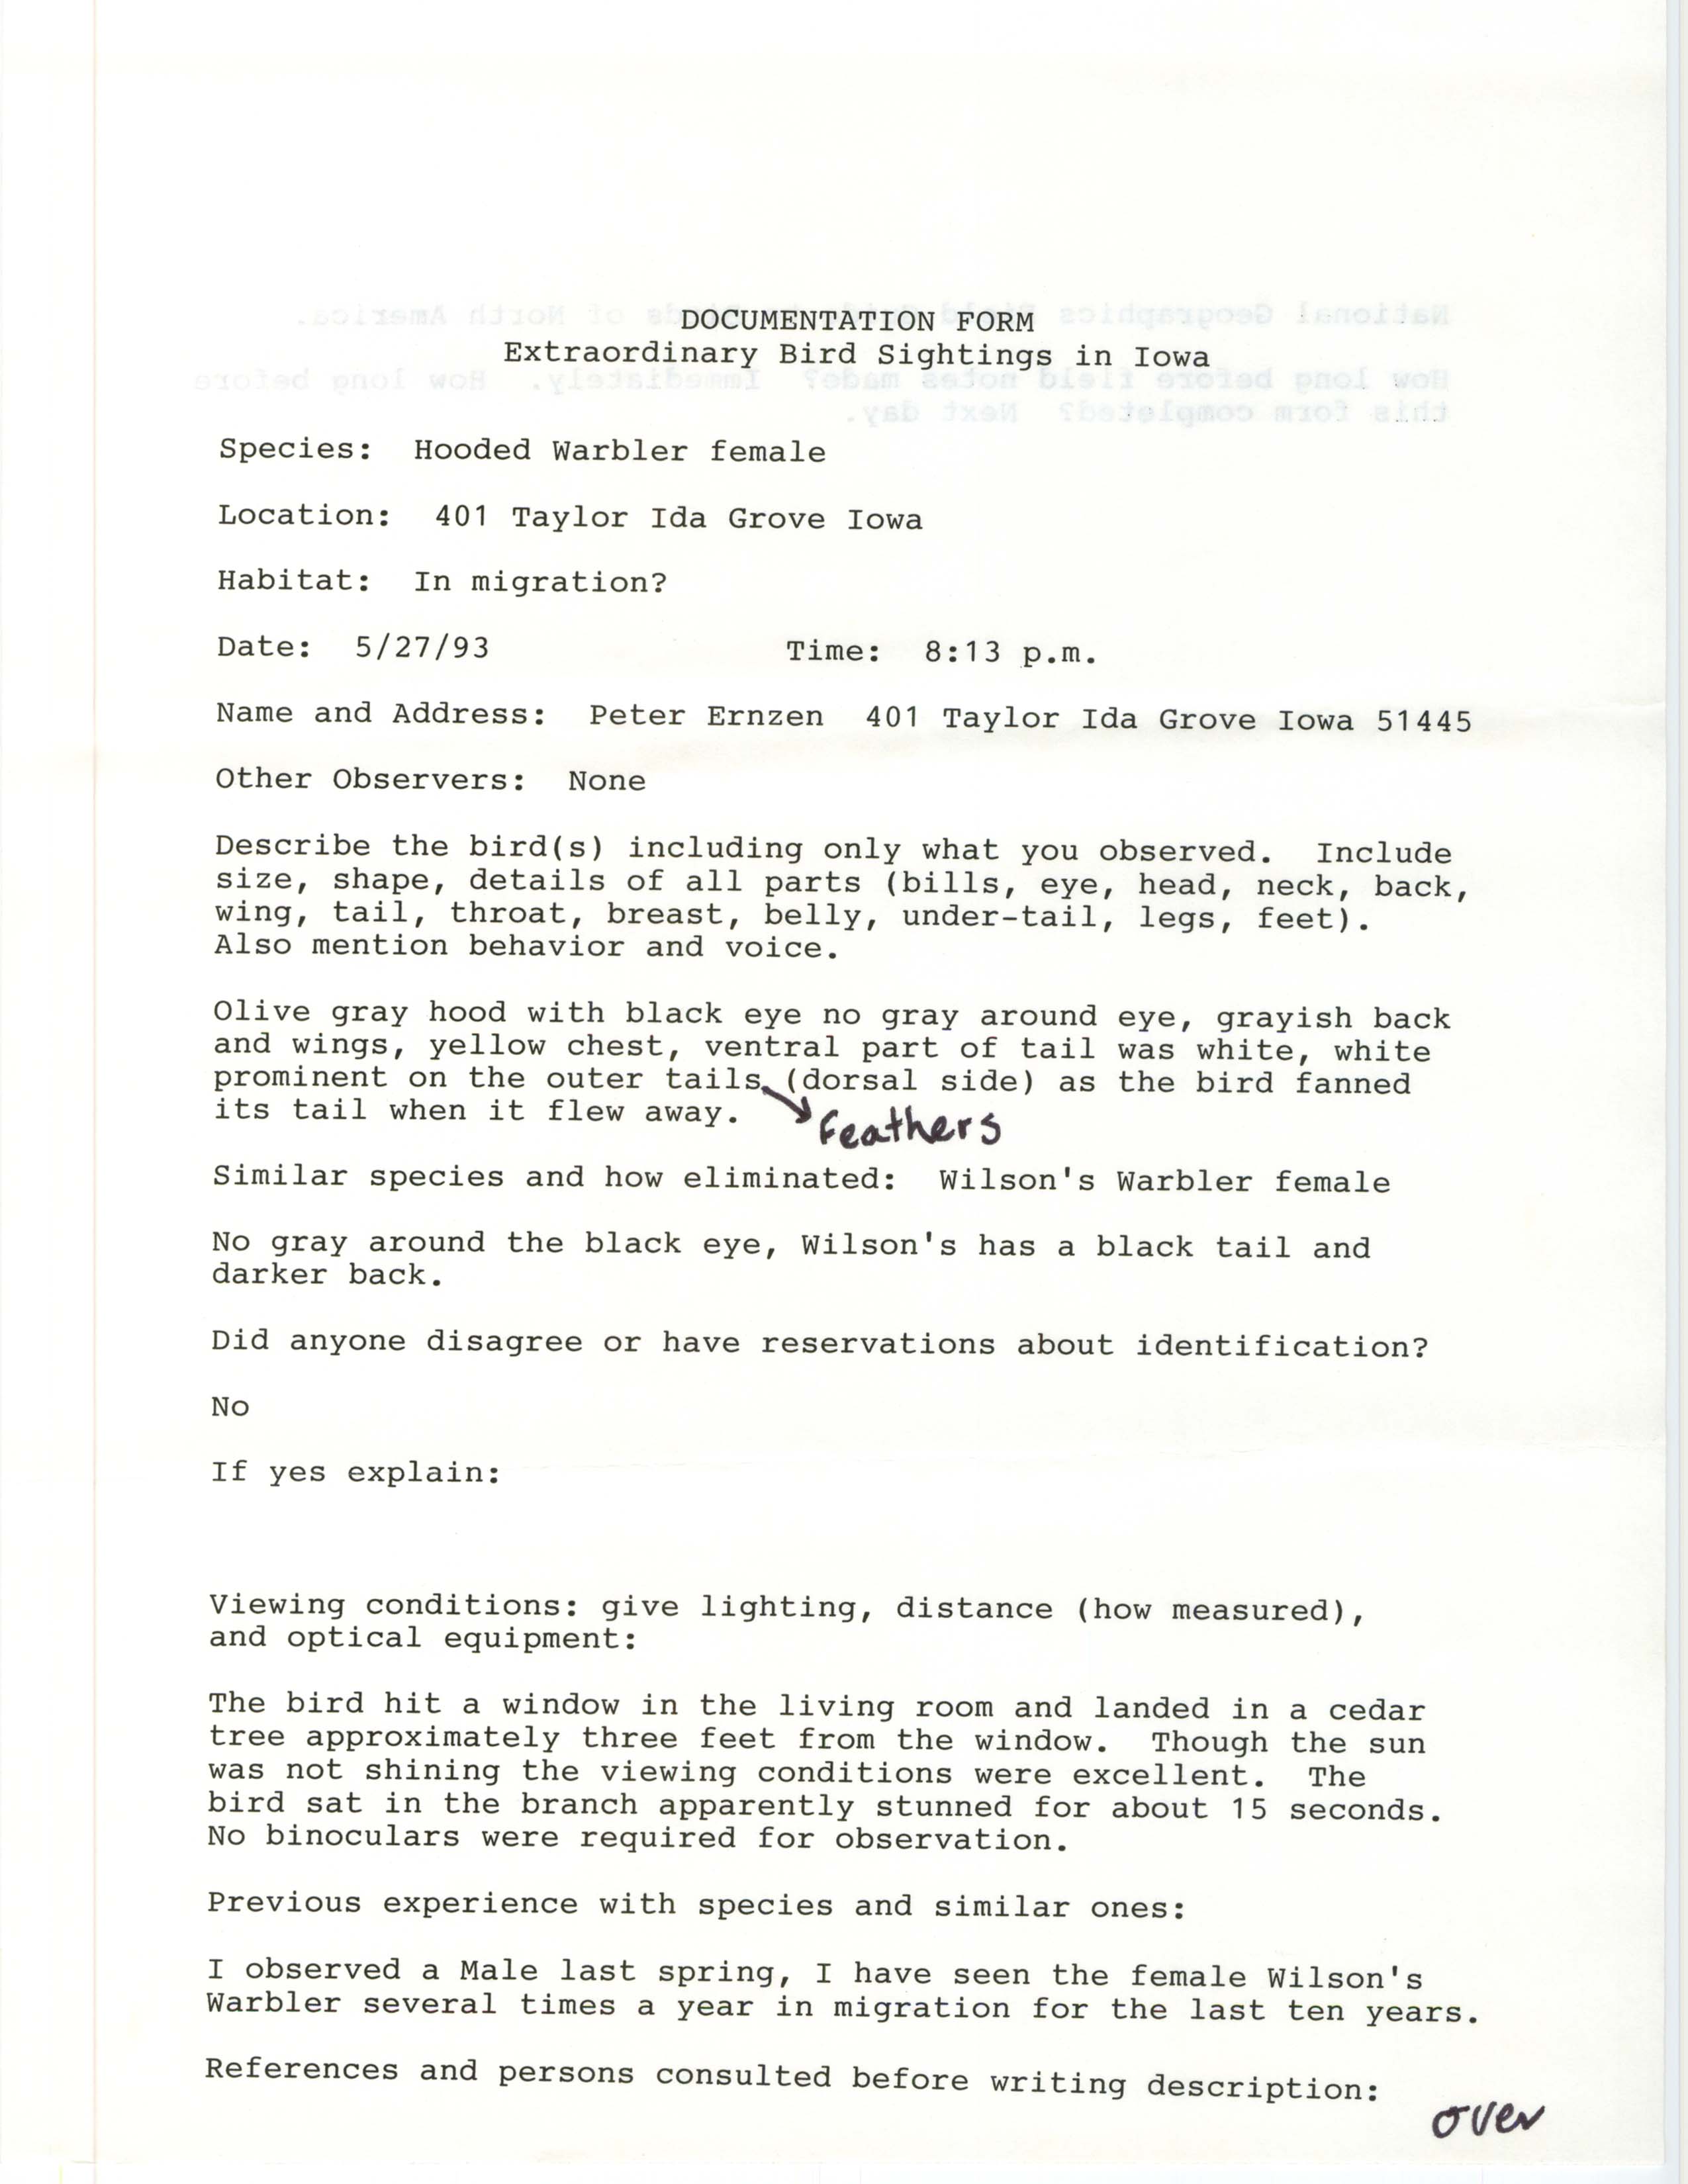 Rare bird documentation form for Hooded Warbler at Ida Grove, 1993